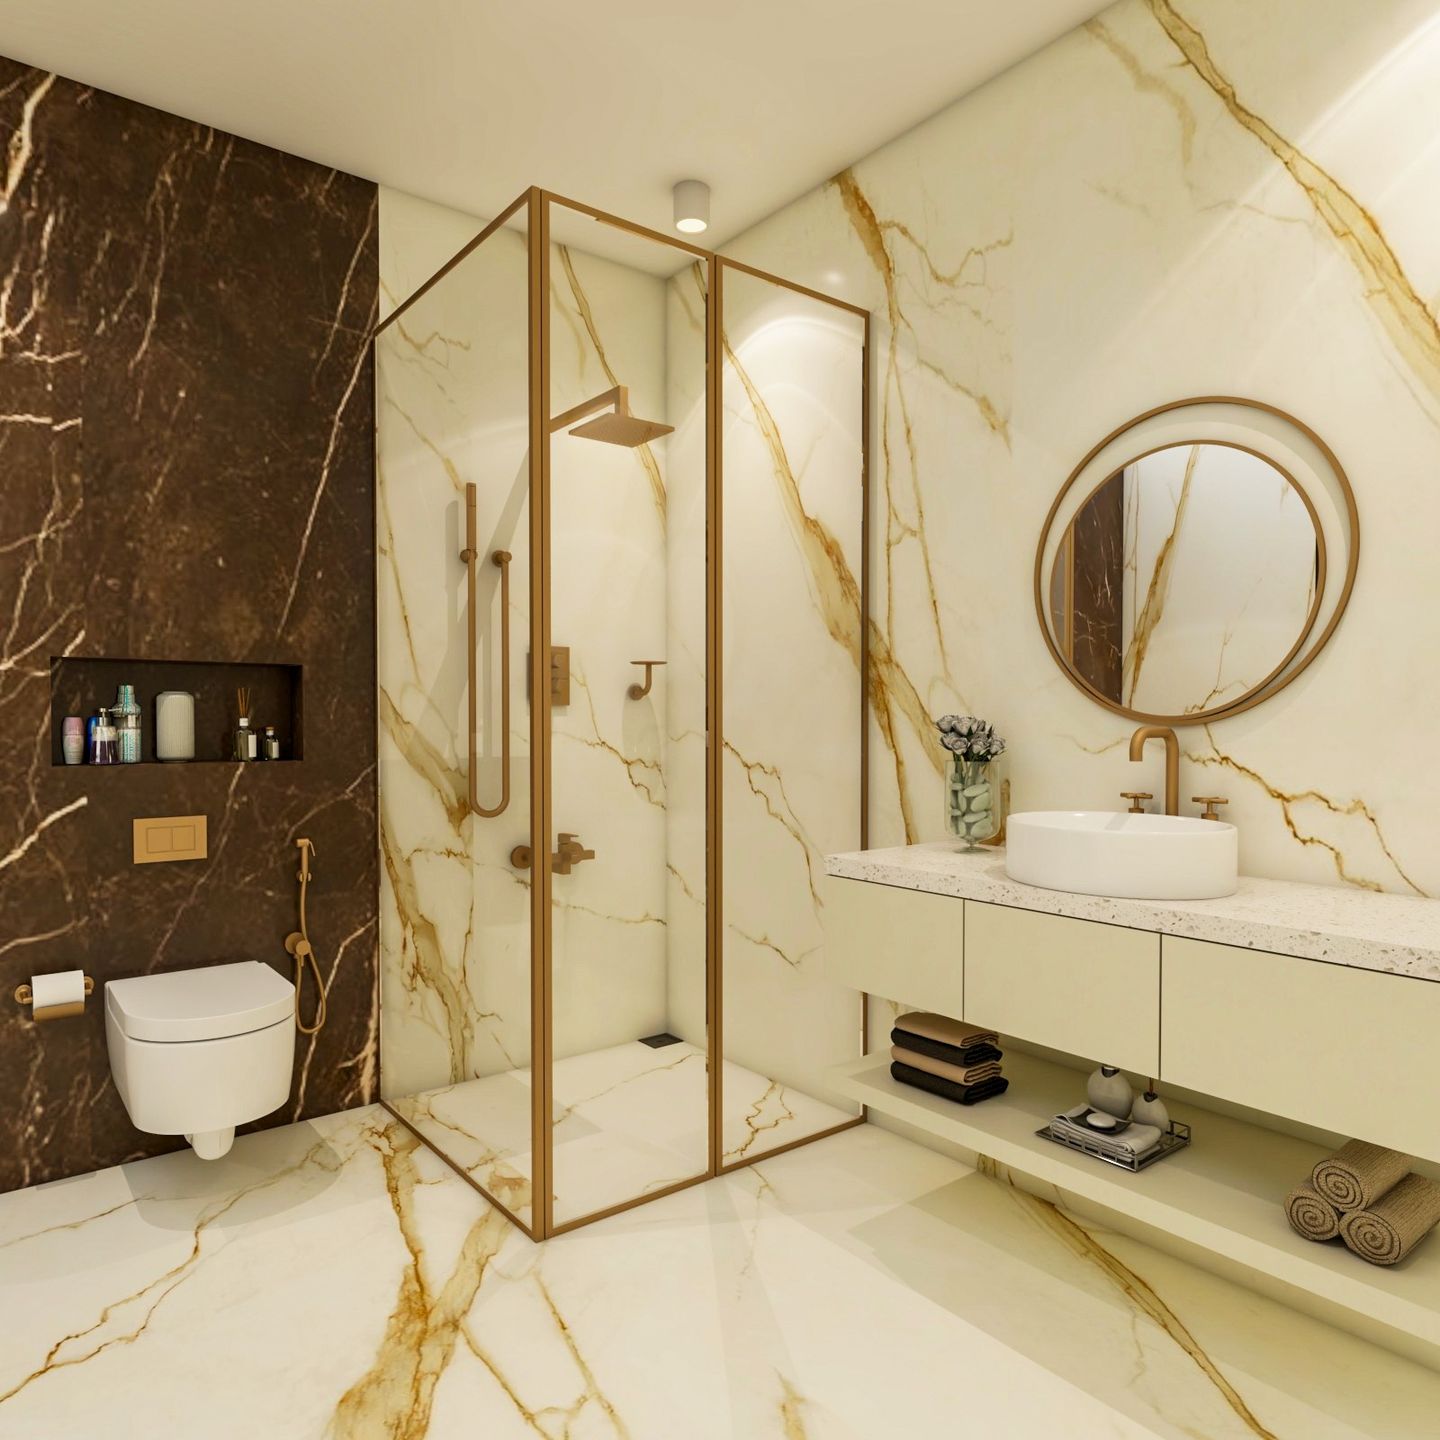 Contemporary White Bathroom Design With Round Mirror - Livspace